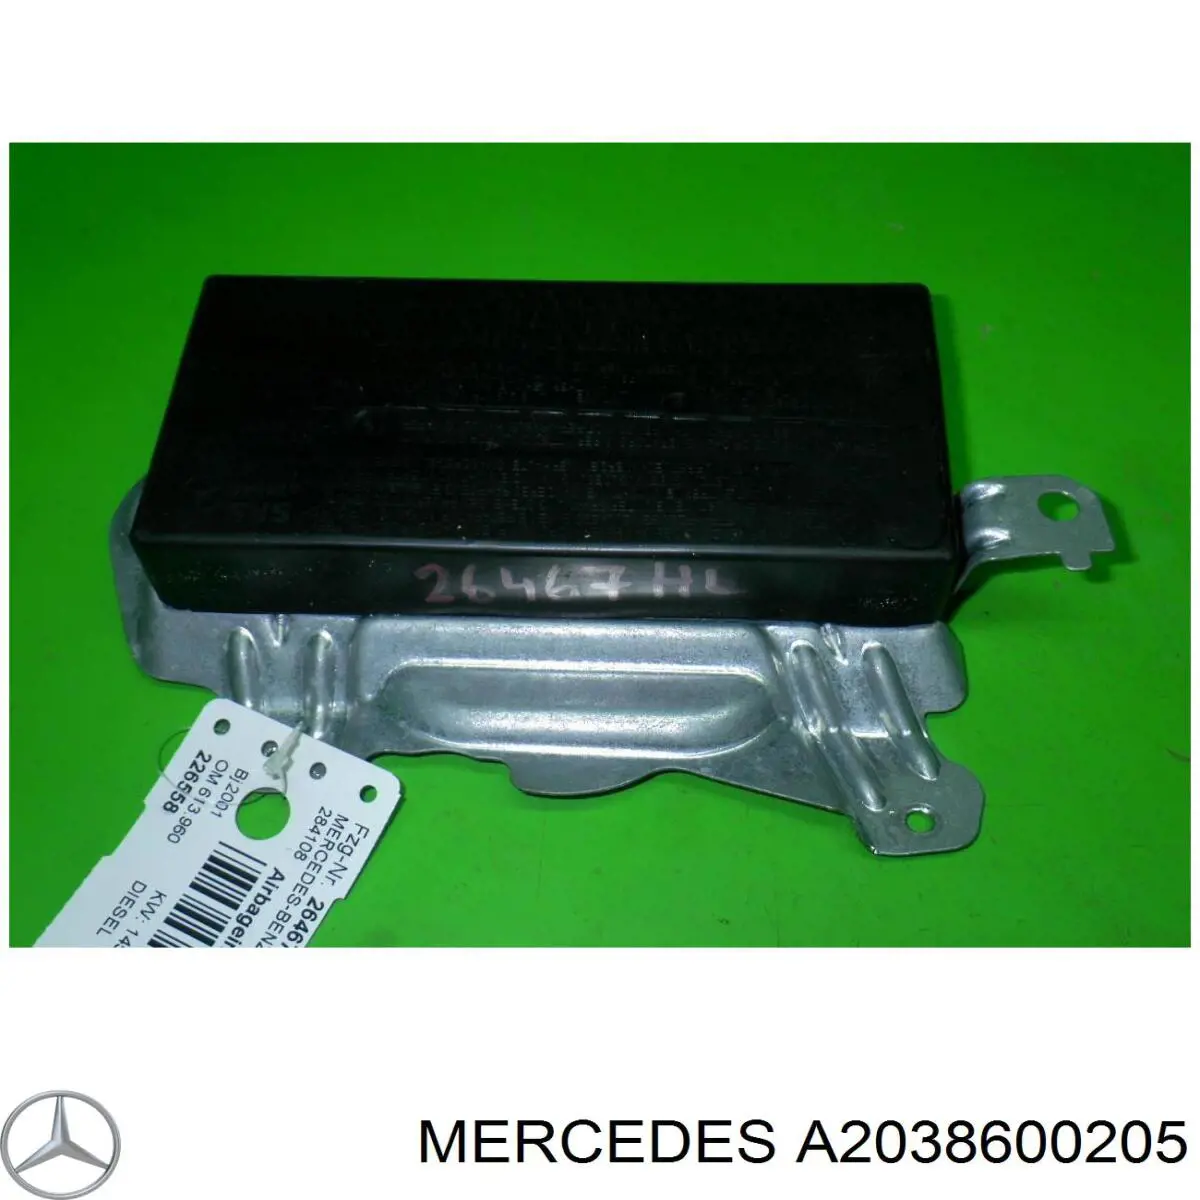 Airbag de la puerta trasera izquierda para Mercedes CLS (C219)